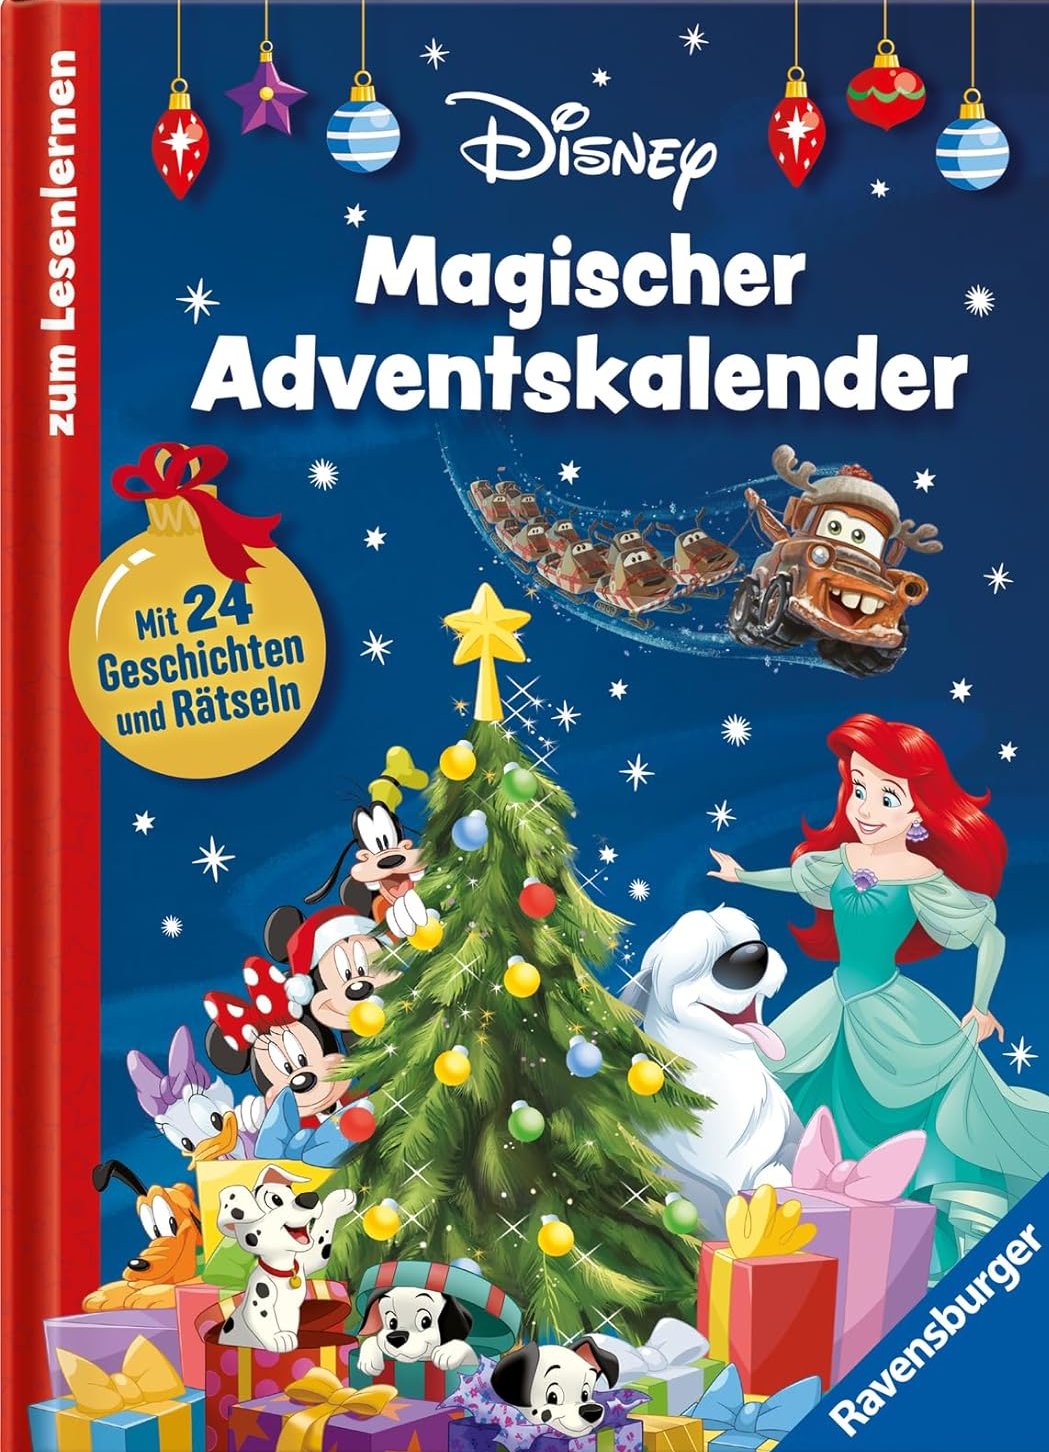 Buchcover "Disney Magischer Adventskalender", Ravensburger